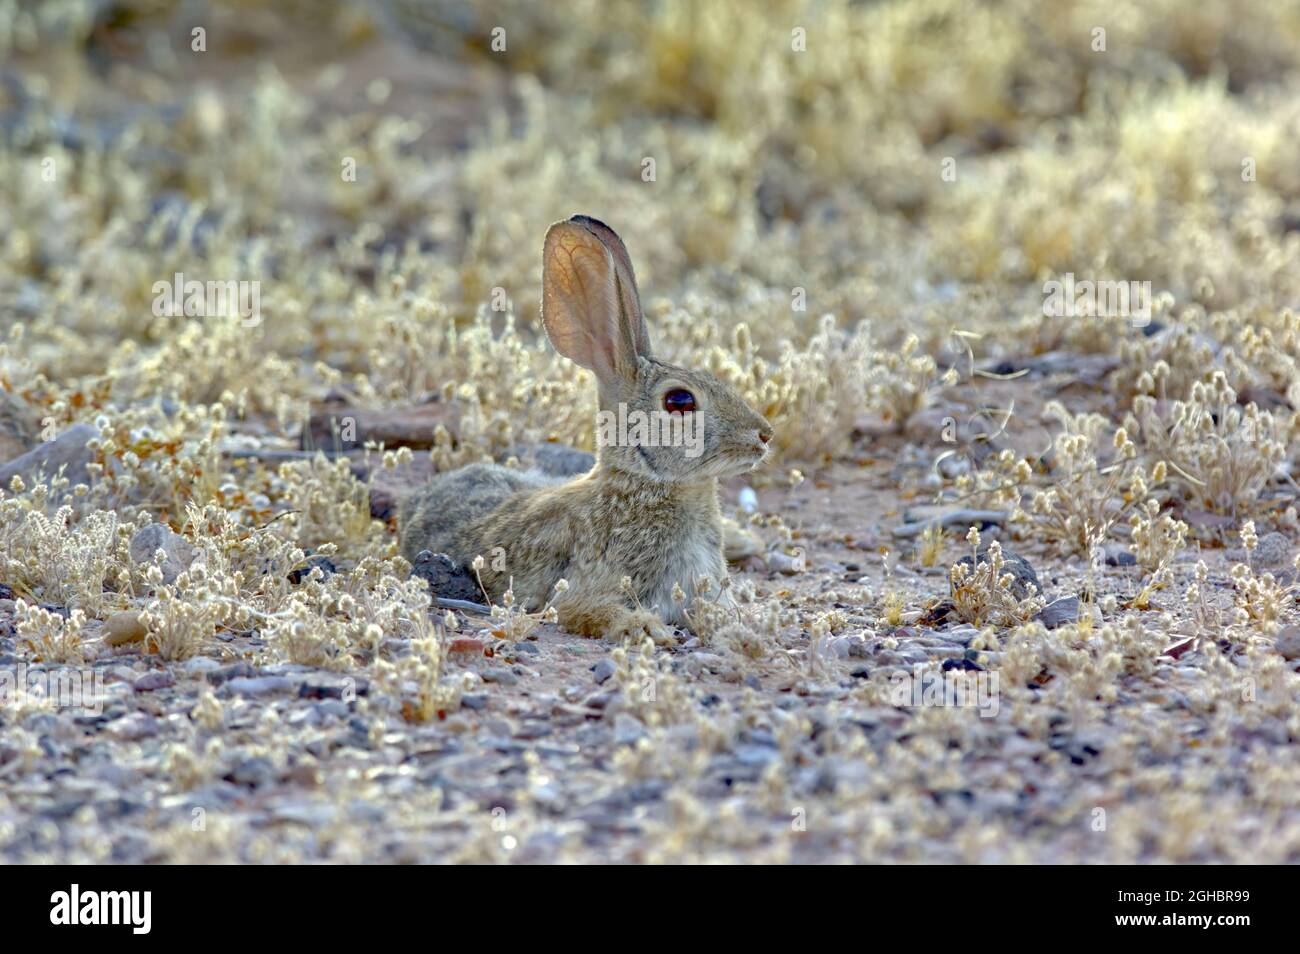 A Desert Cottontail Rabbit, native to Arizona, relaxing among vegetation. Scientific name is Leporidae Sylvilagus. Stock Photo